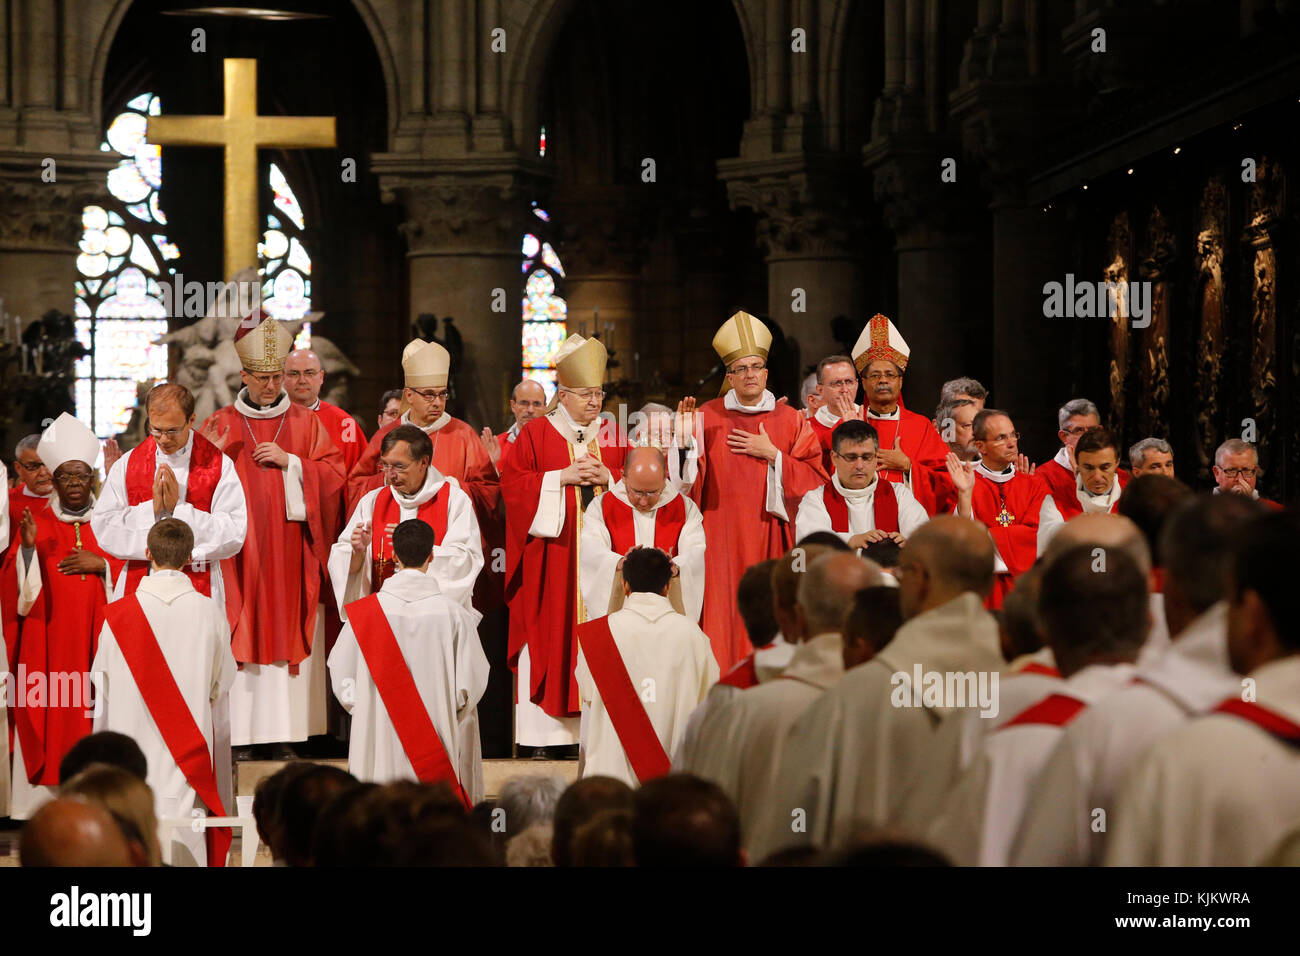 Priest ordinations at Notre-Dame de Paris cathedral. France. Stock Photo